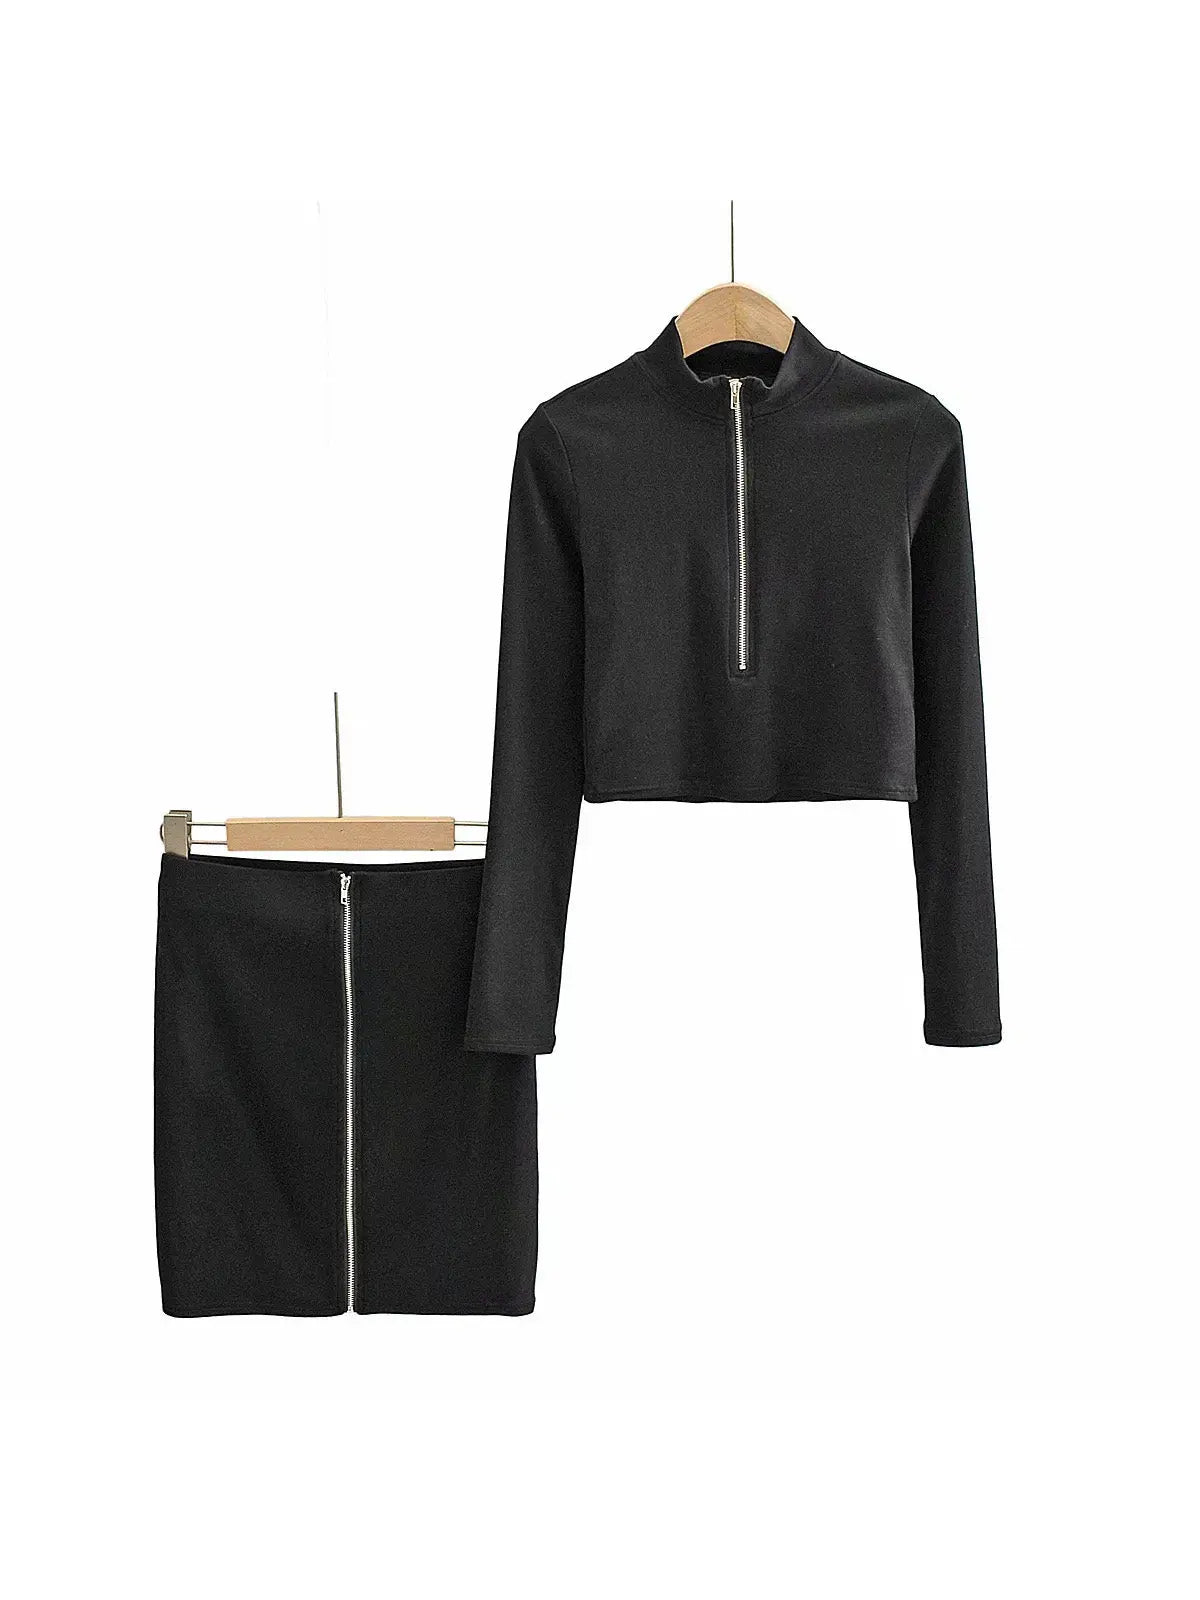 Long Sleeve Sexy Zipper Twp Piece Outfits adawholesale